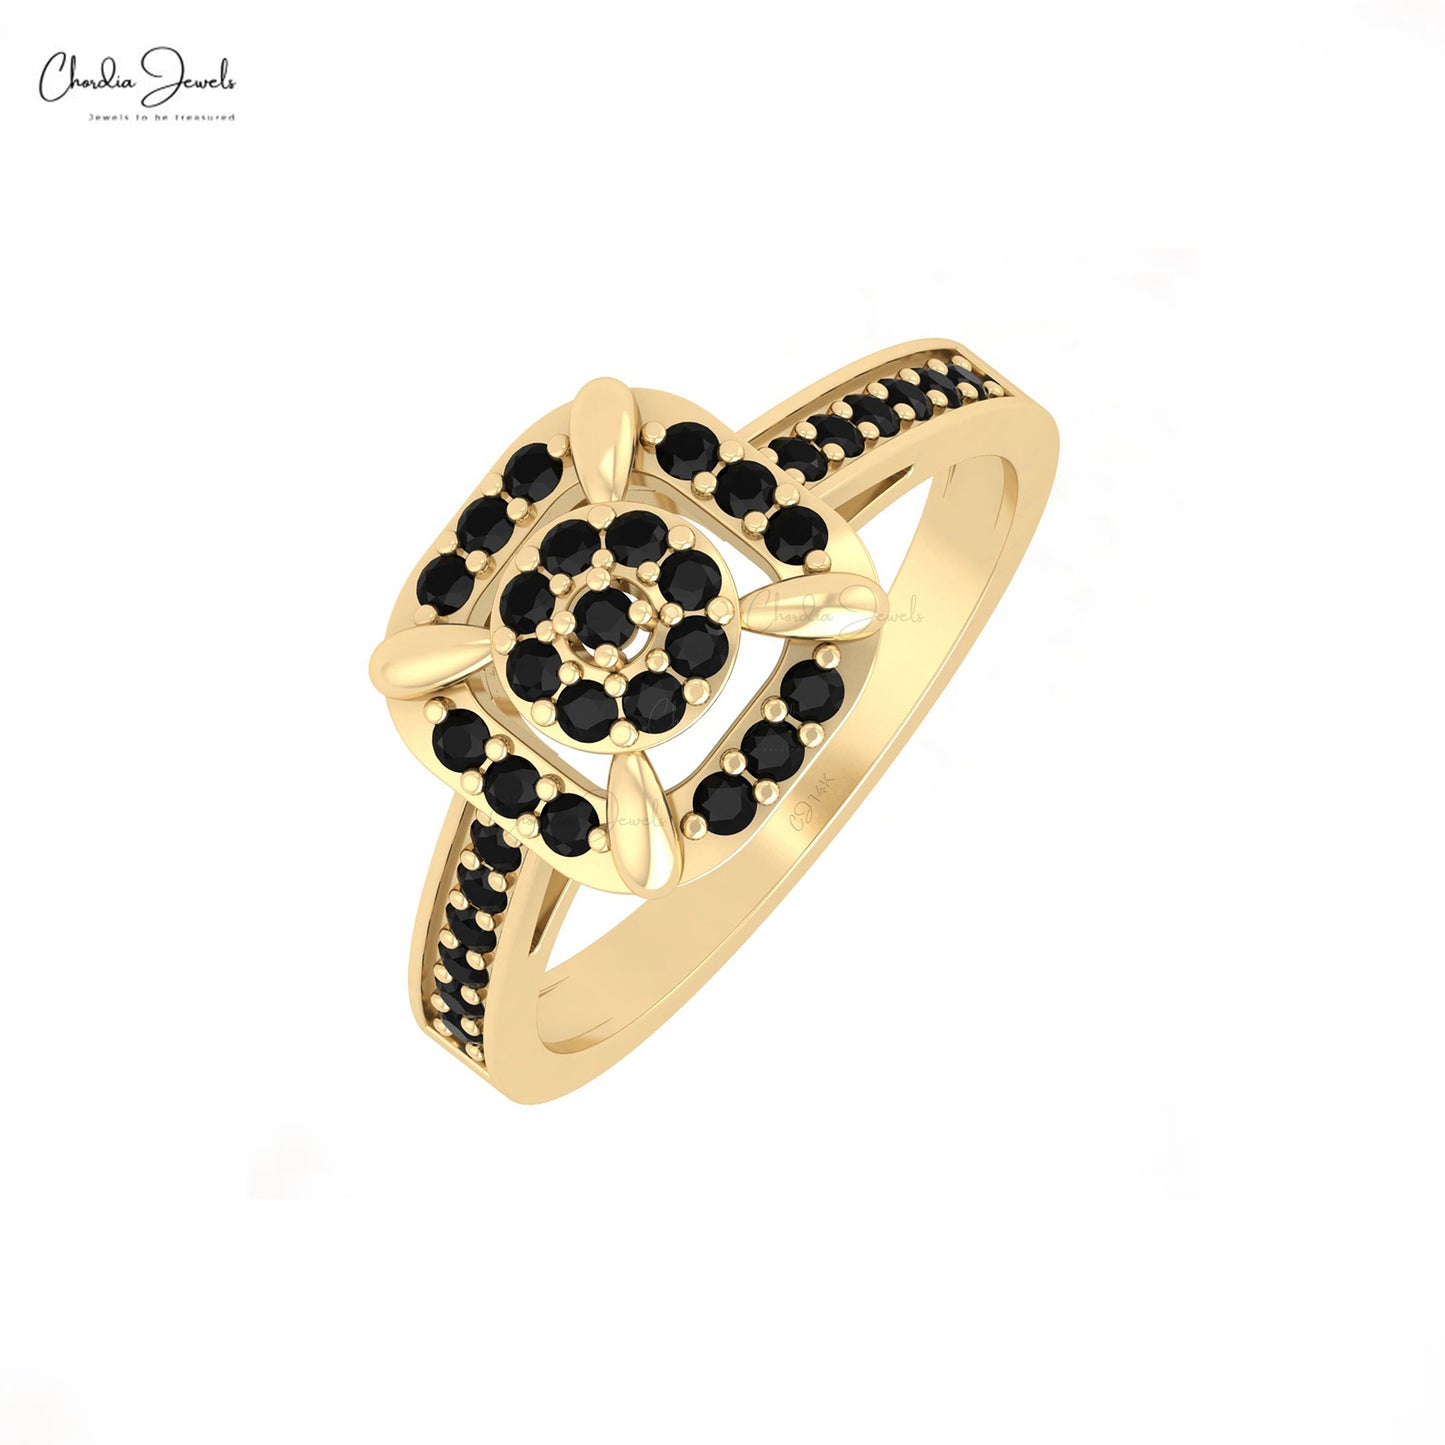 Natural Black Diamond Ring For Men in 14k Solid Gold 1.5mm April Birthstone Wedding Ring